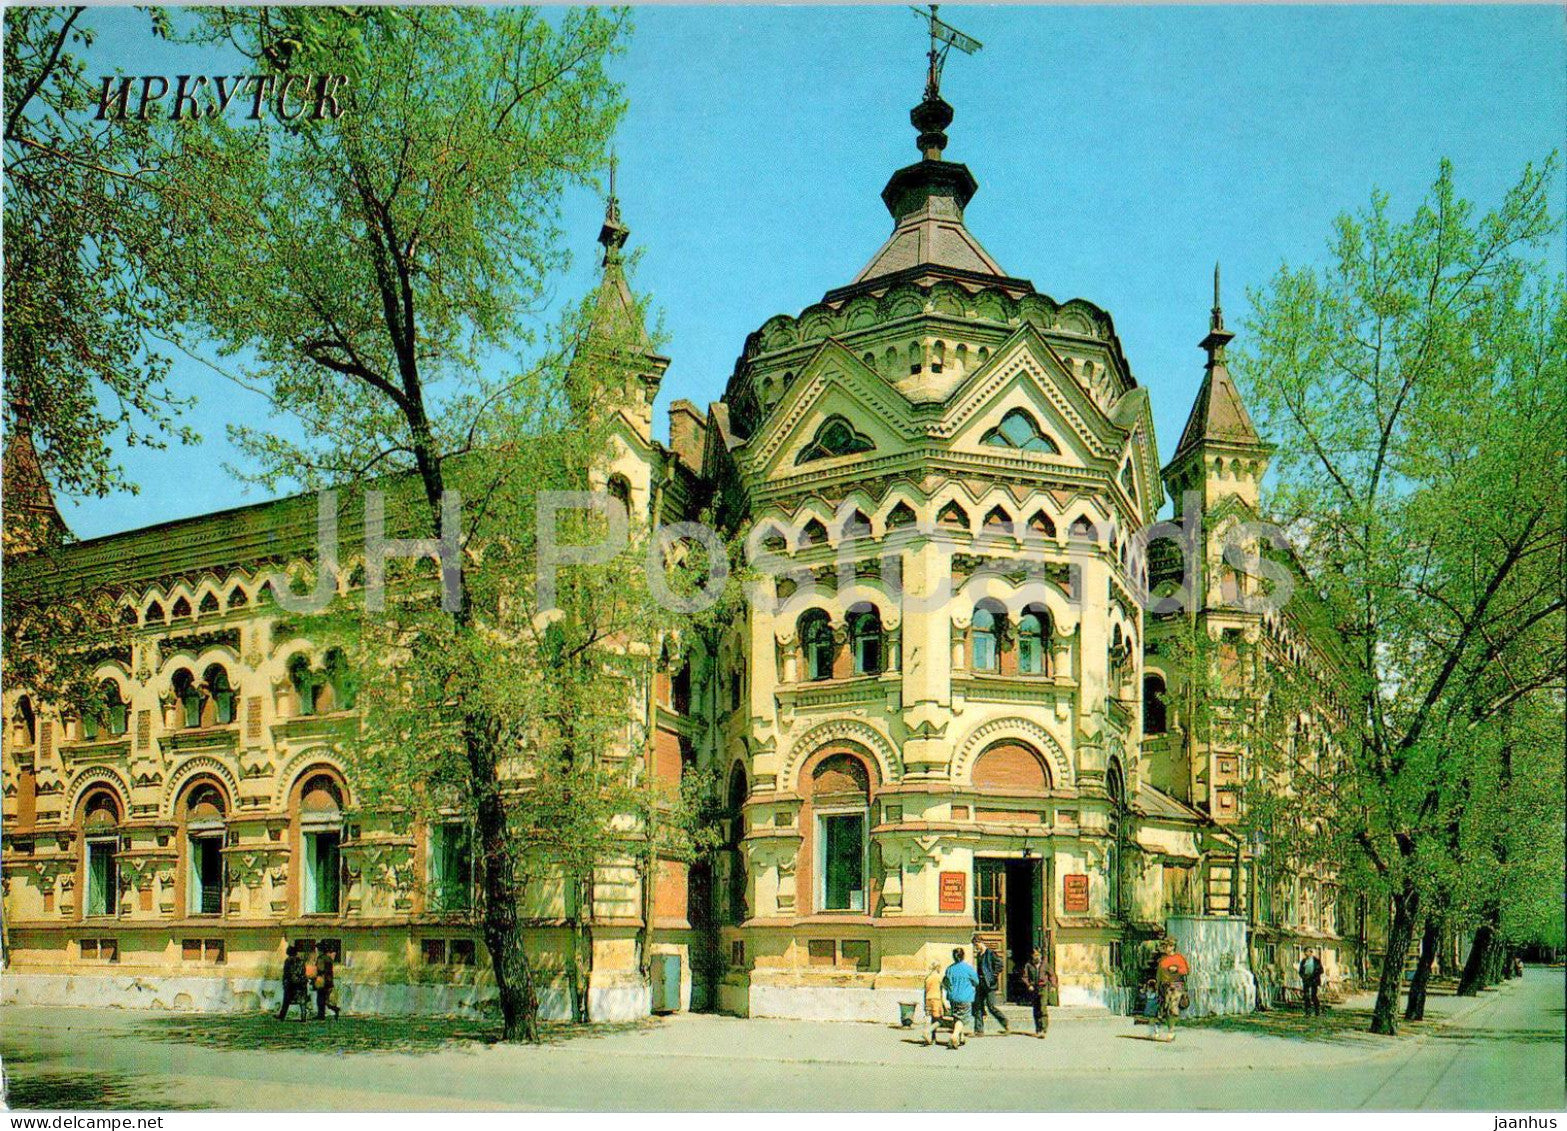 Irkutsk - Palace of Young Pioneers and Schoolchildren - 1990 - Russia USSR - unused - JH Postcards